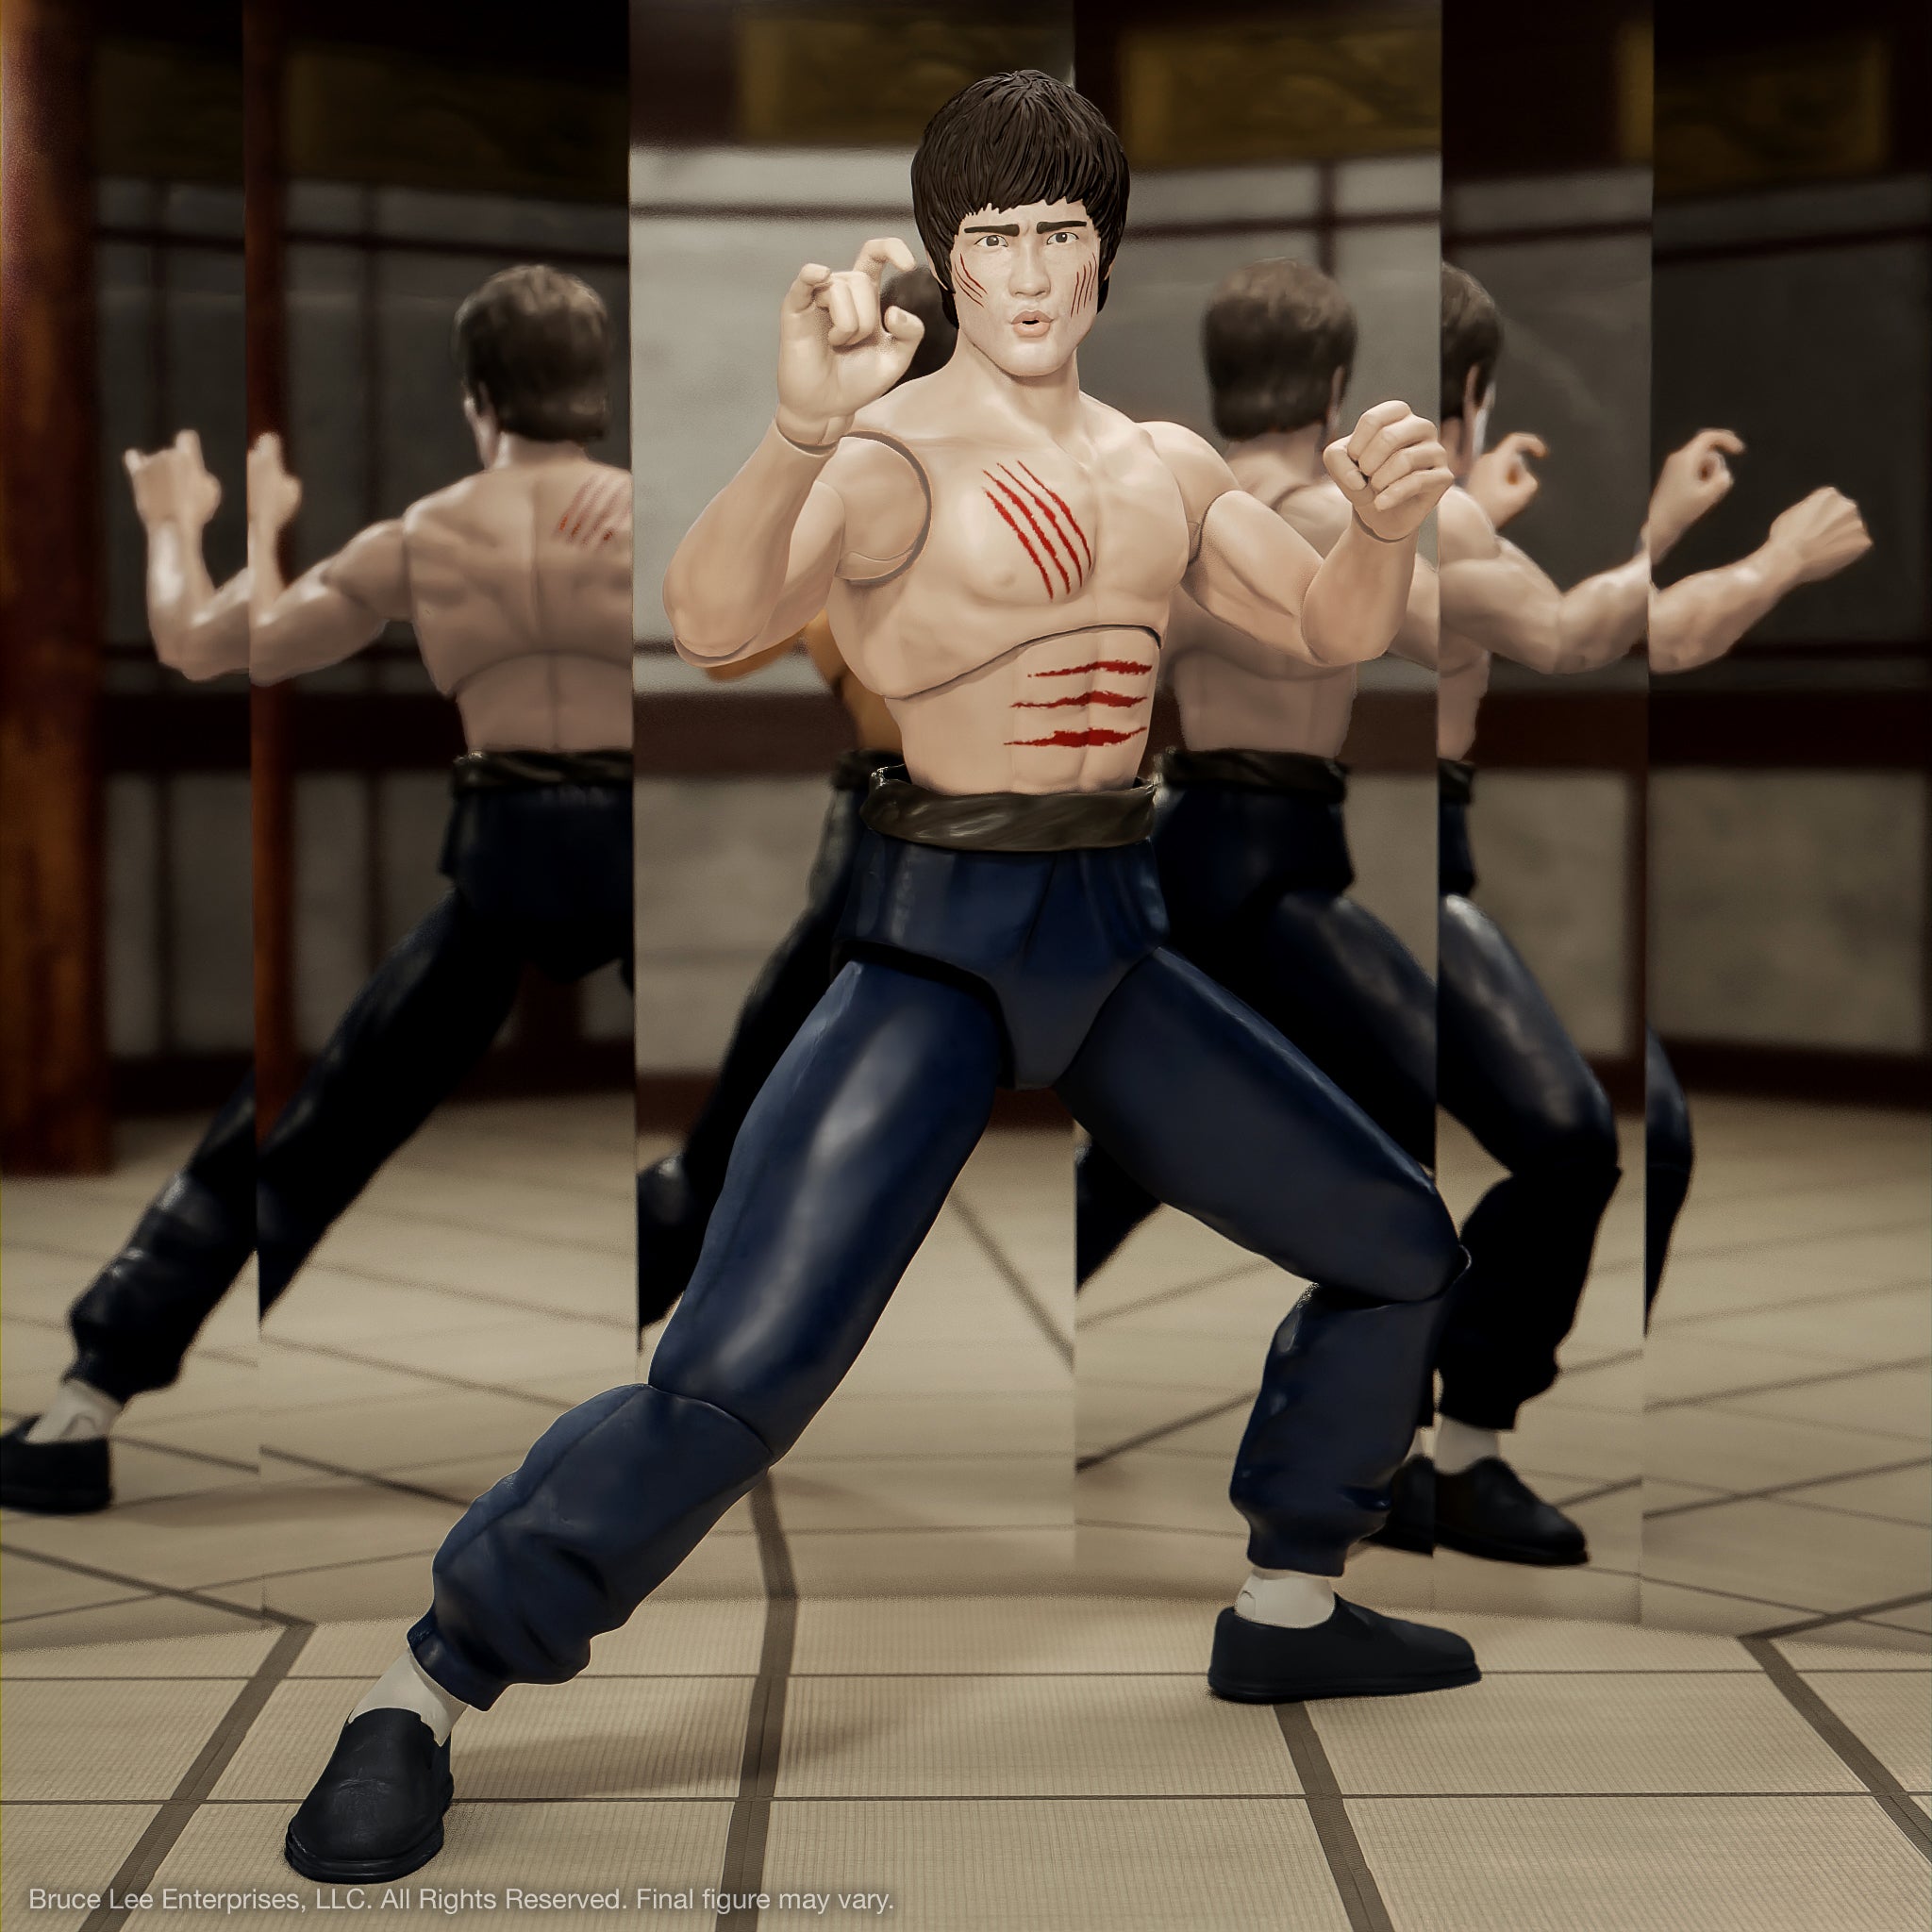 Super7 Ultimates: Bruce Lee - The Fighter